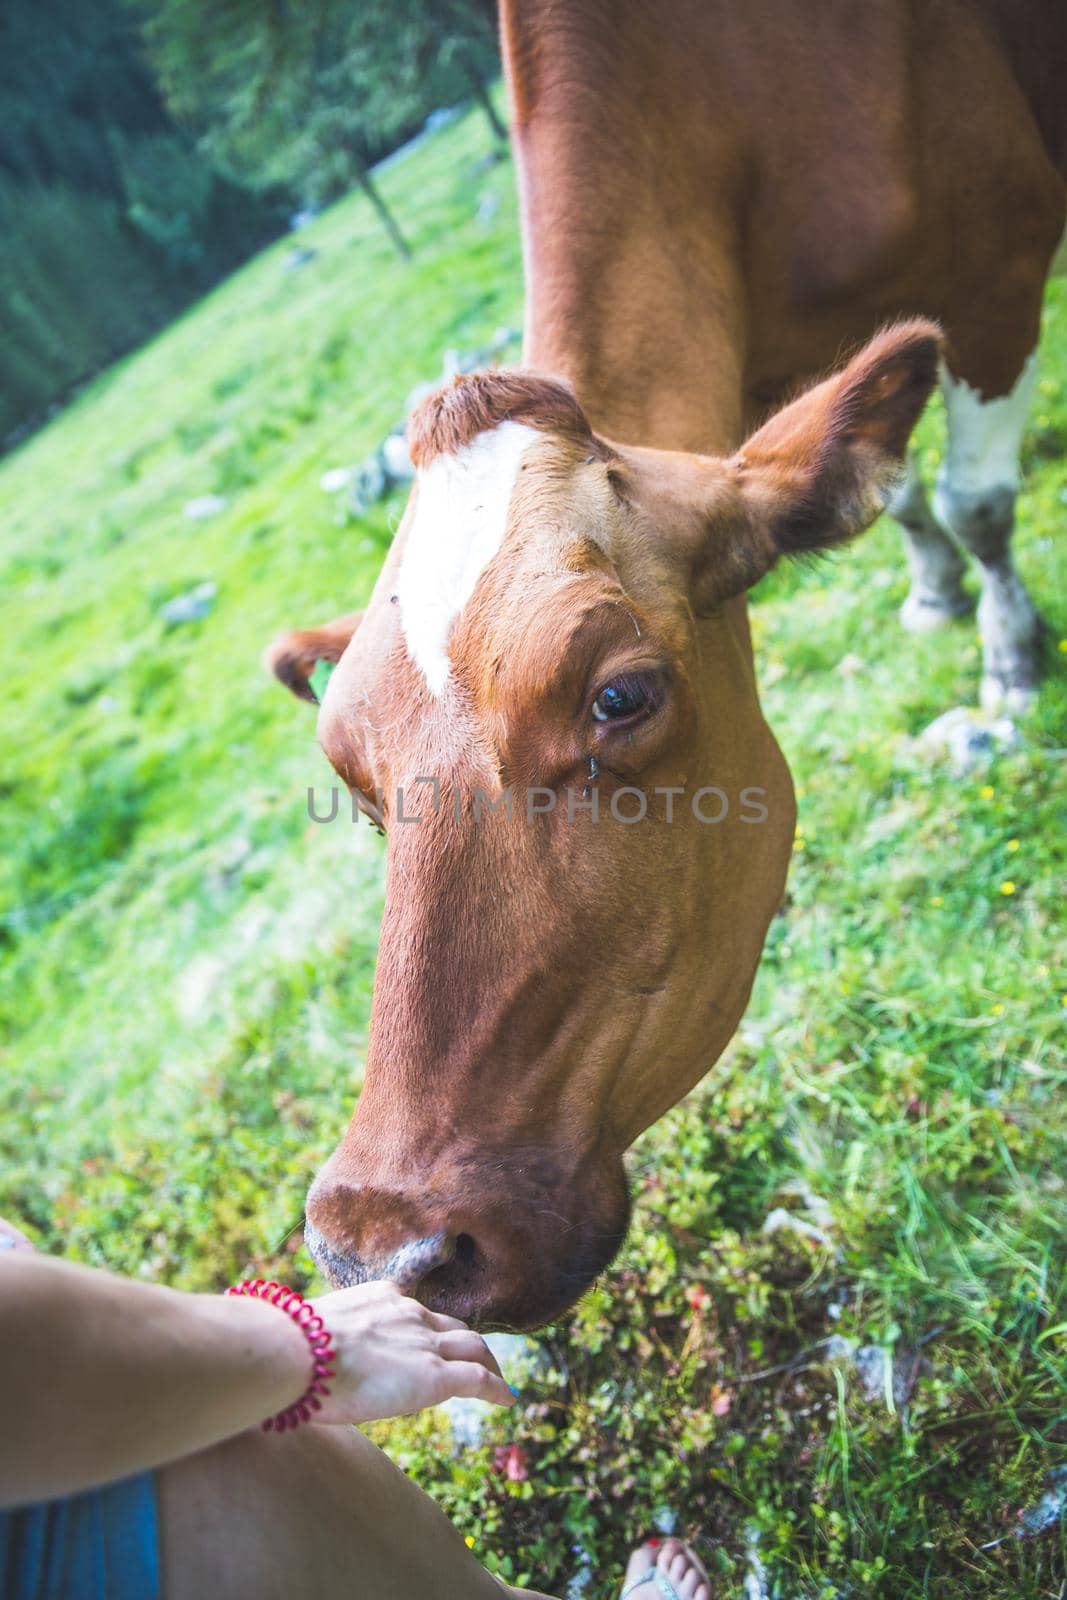 Feeding a cow on an idyllic meadow in the European alps, Austria by Daxenbichler